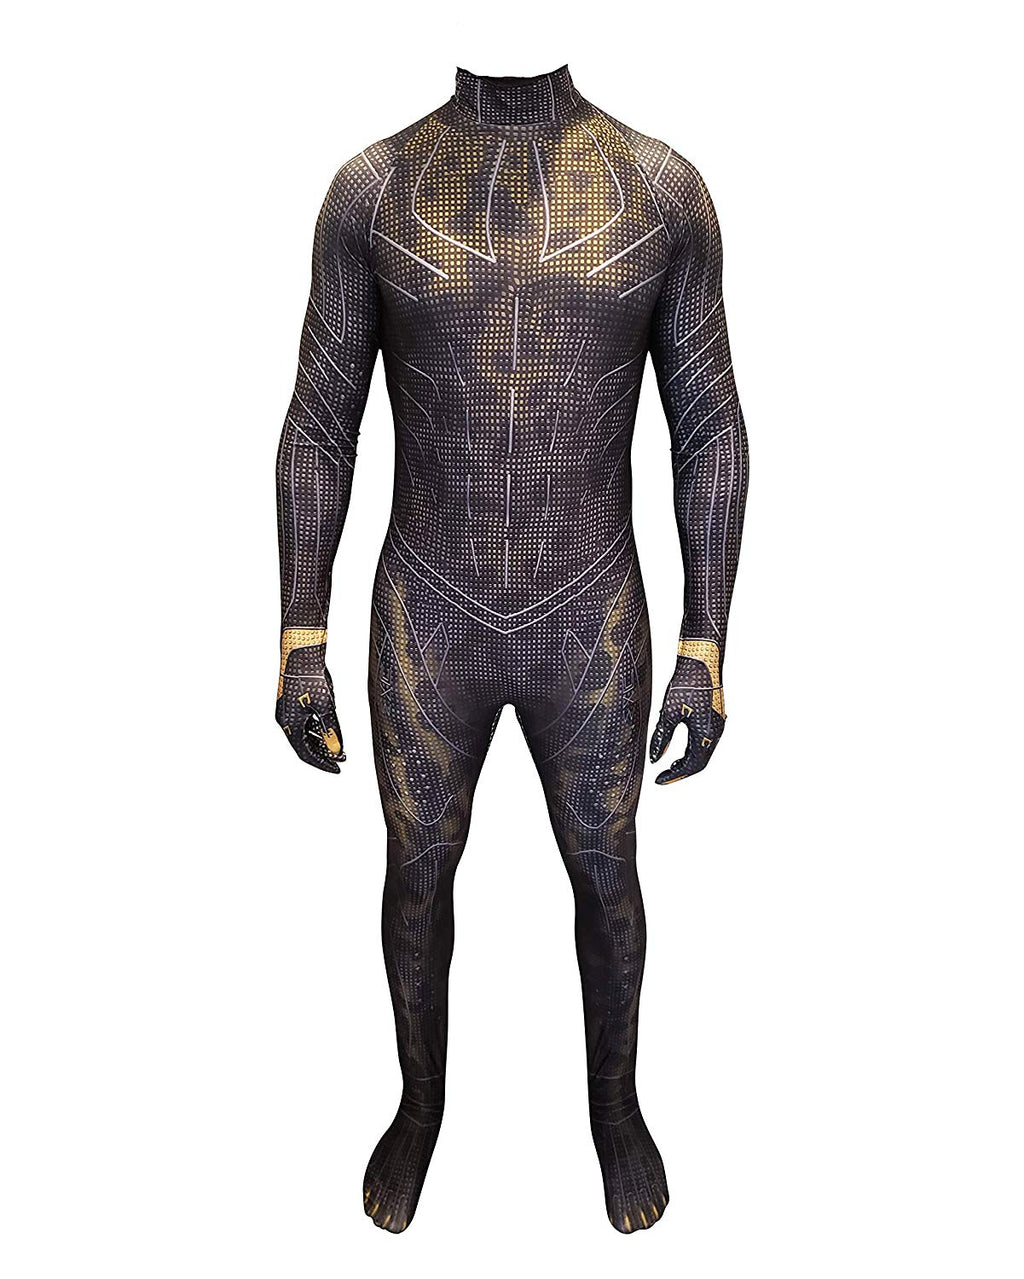 Killmonger Suit - Aesthetic Cosplay, LLC